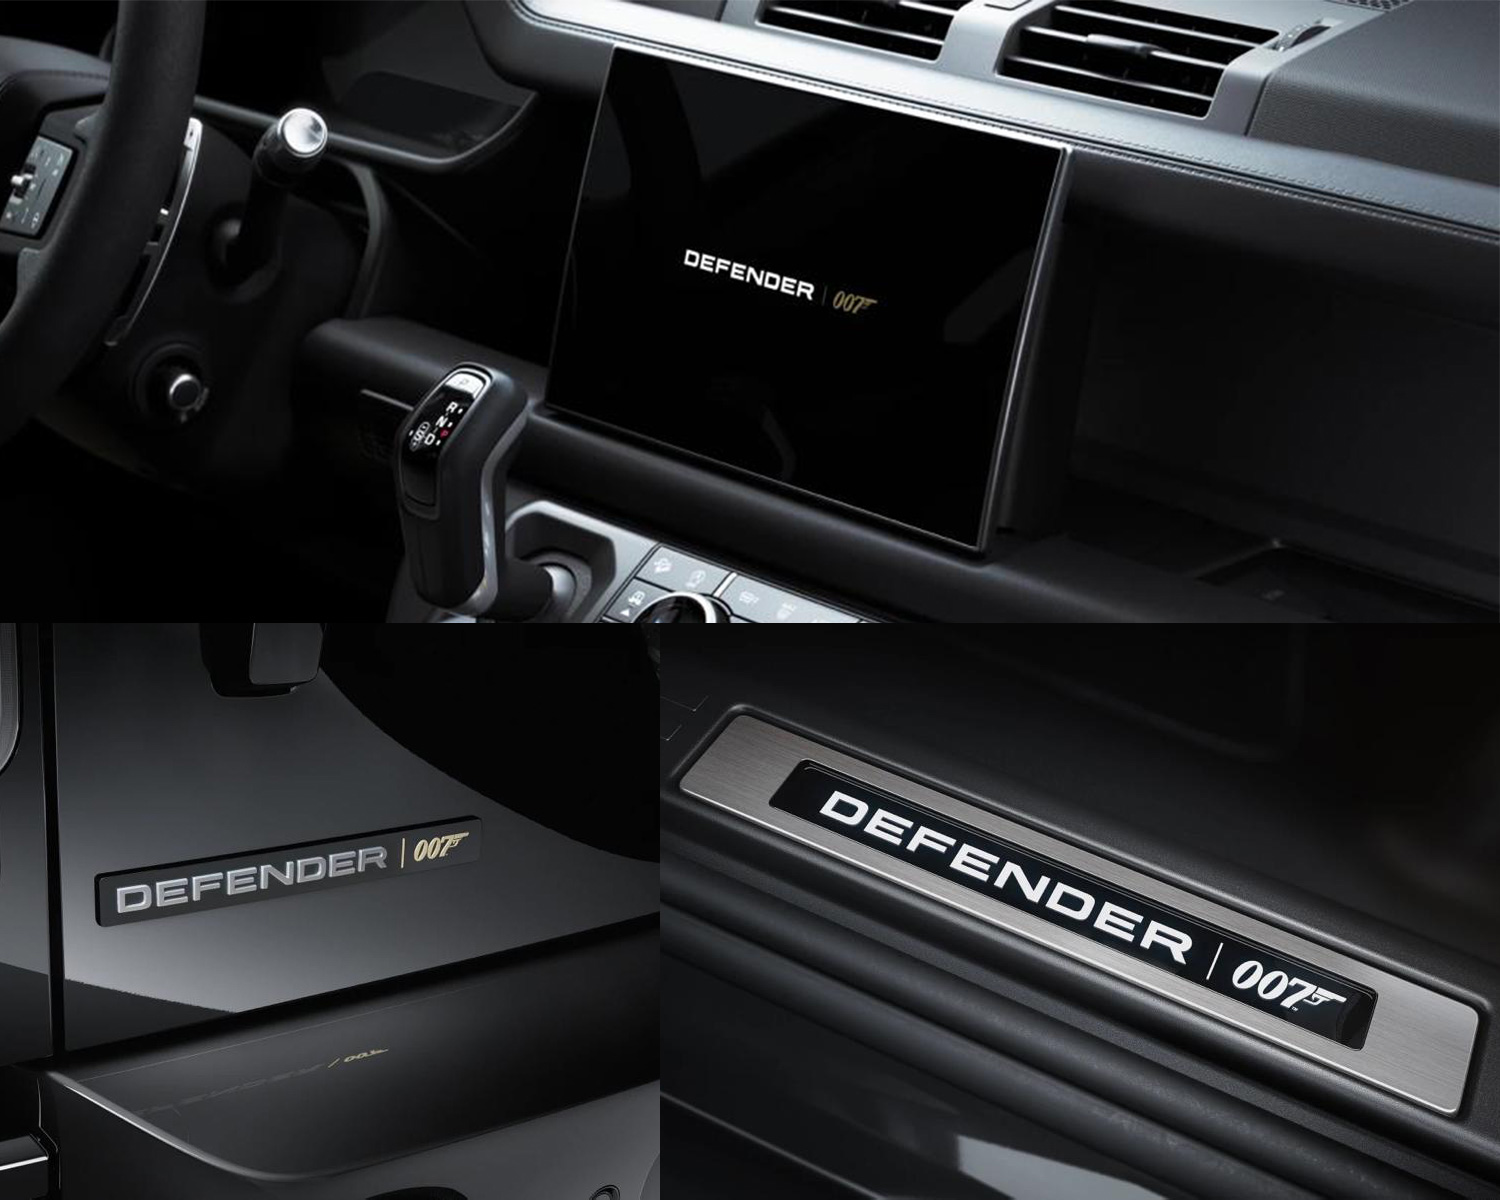 Land Rover 007 details infotainment system threadplate